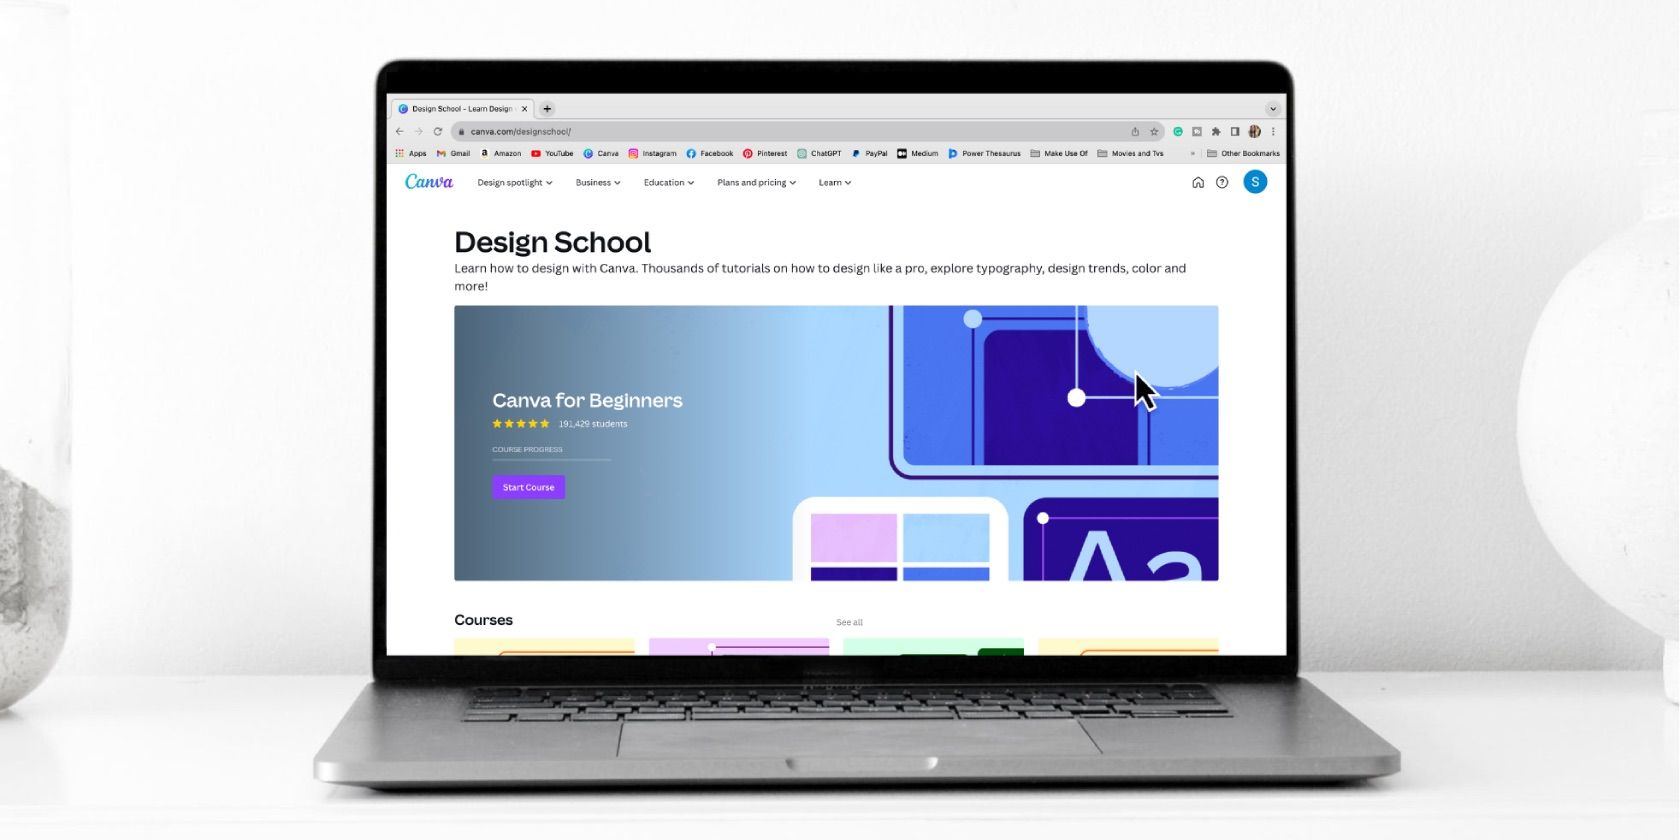 Canva Design School website on laptop